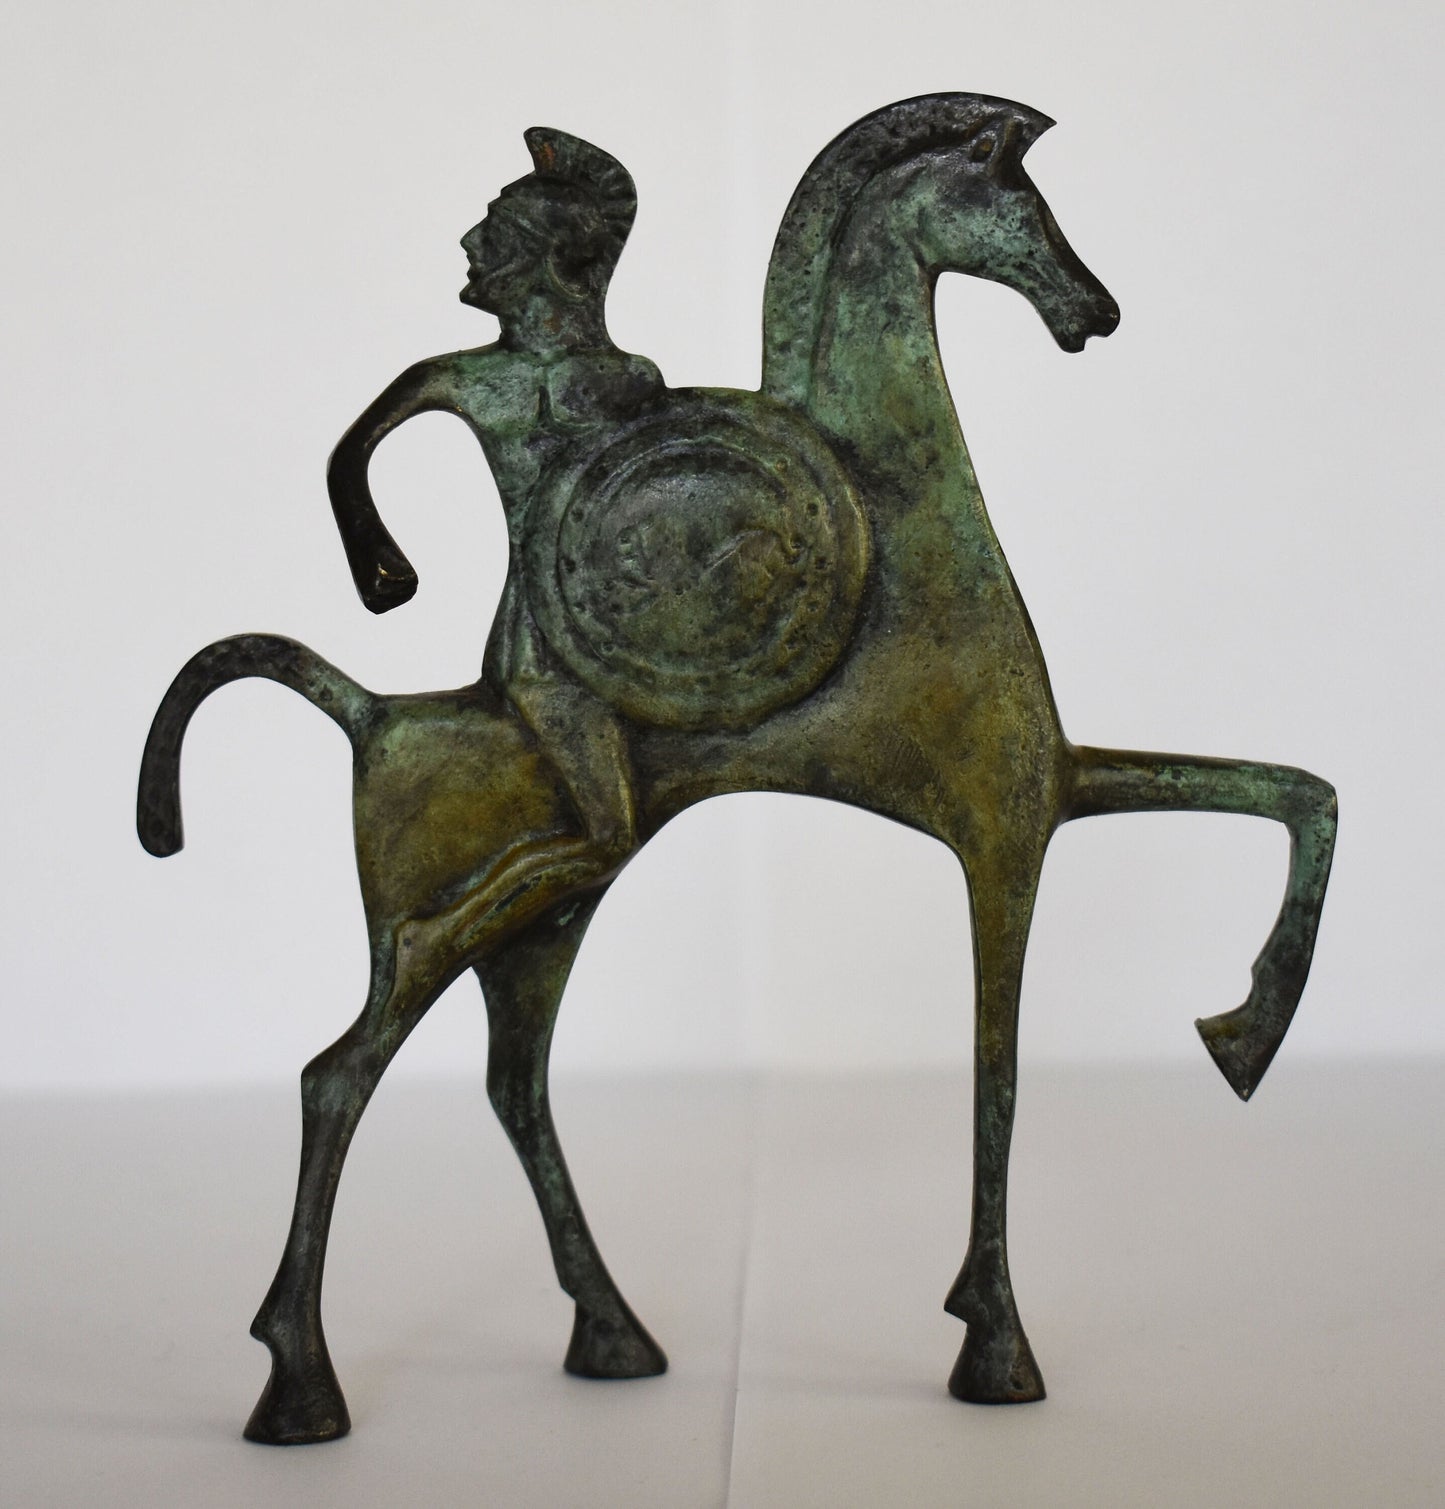 Ancient Greek Warrior on Horse - Battle of Marathon - Greco-Persian War - 490 BC - Pure Bronze Sculpture